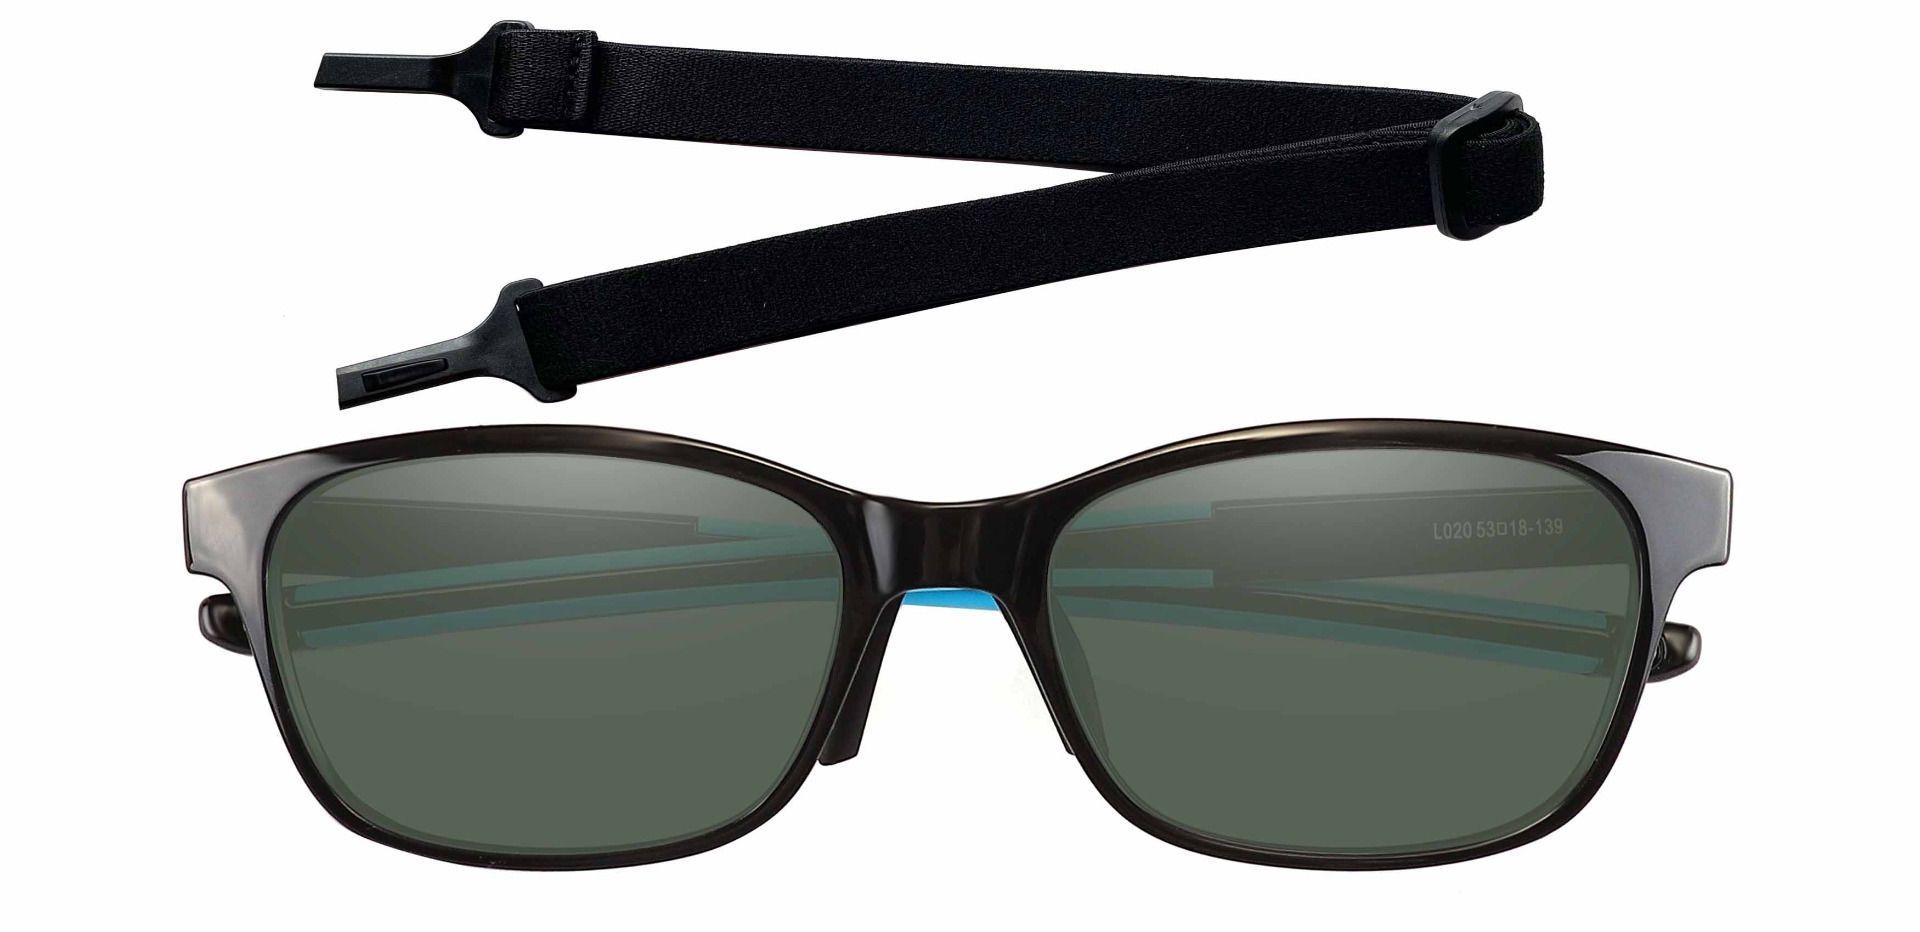 Higgins Rectangle Reading Sunglasses - Black Frame With Green Lenses